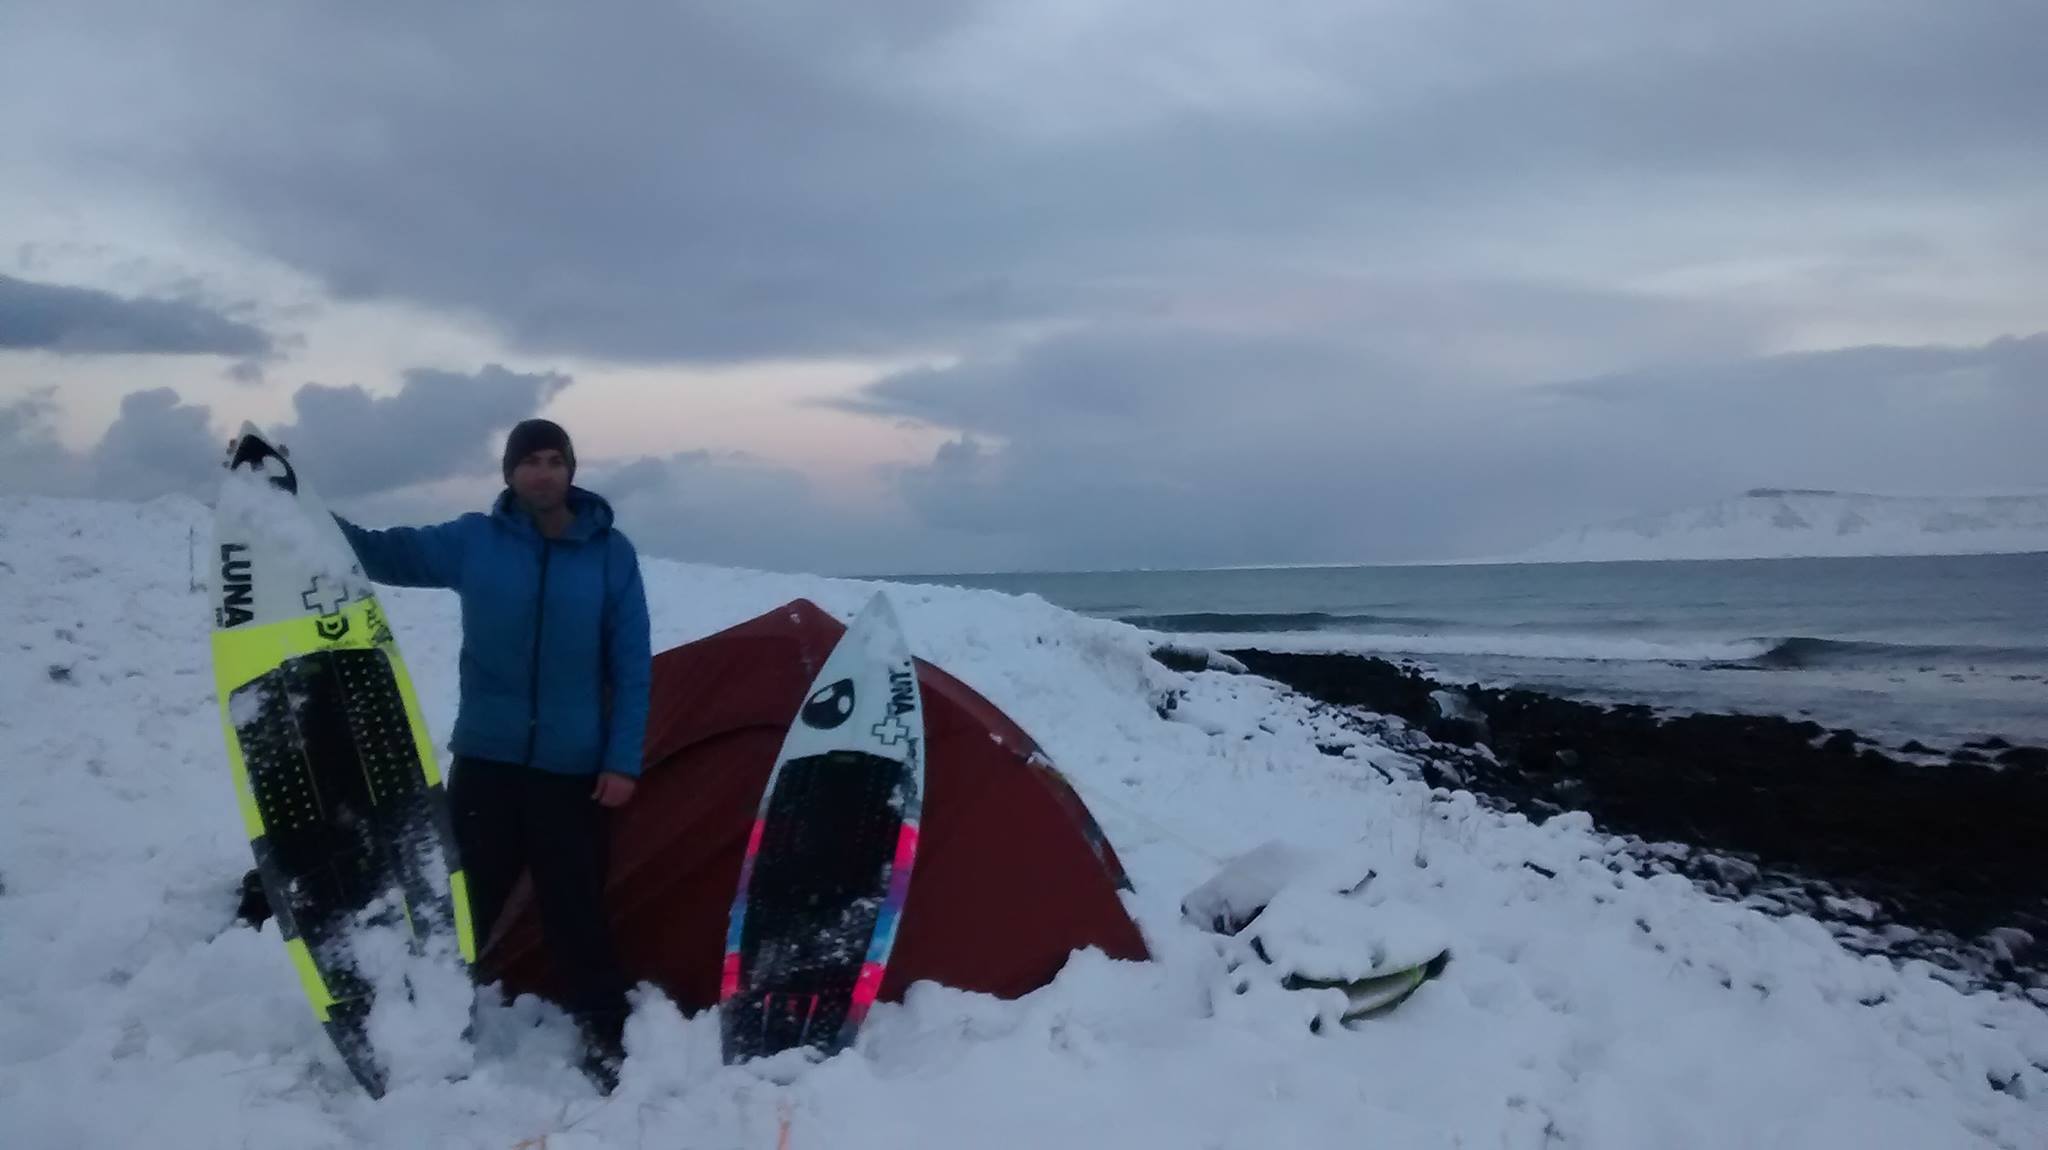 ian-battrick-solo-snow-camping-iceland-cold-water-surf-lunasurf-full-deck-grip-iceland.jpg